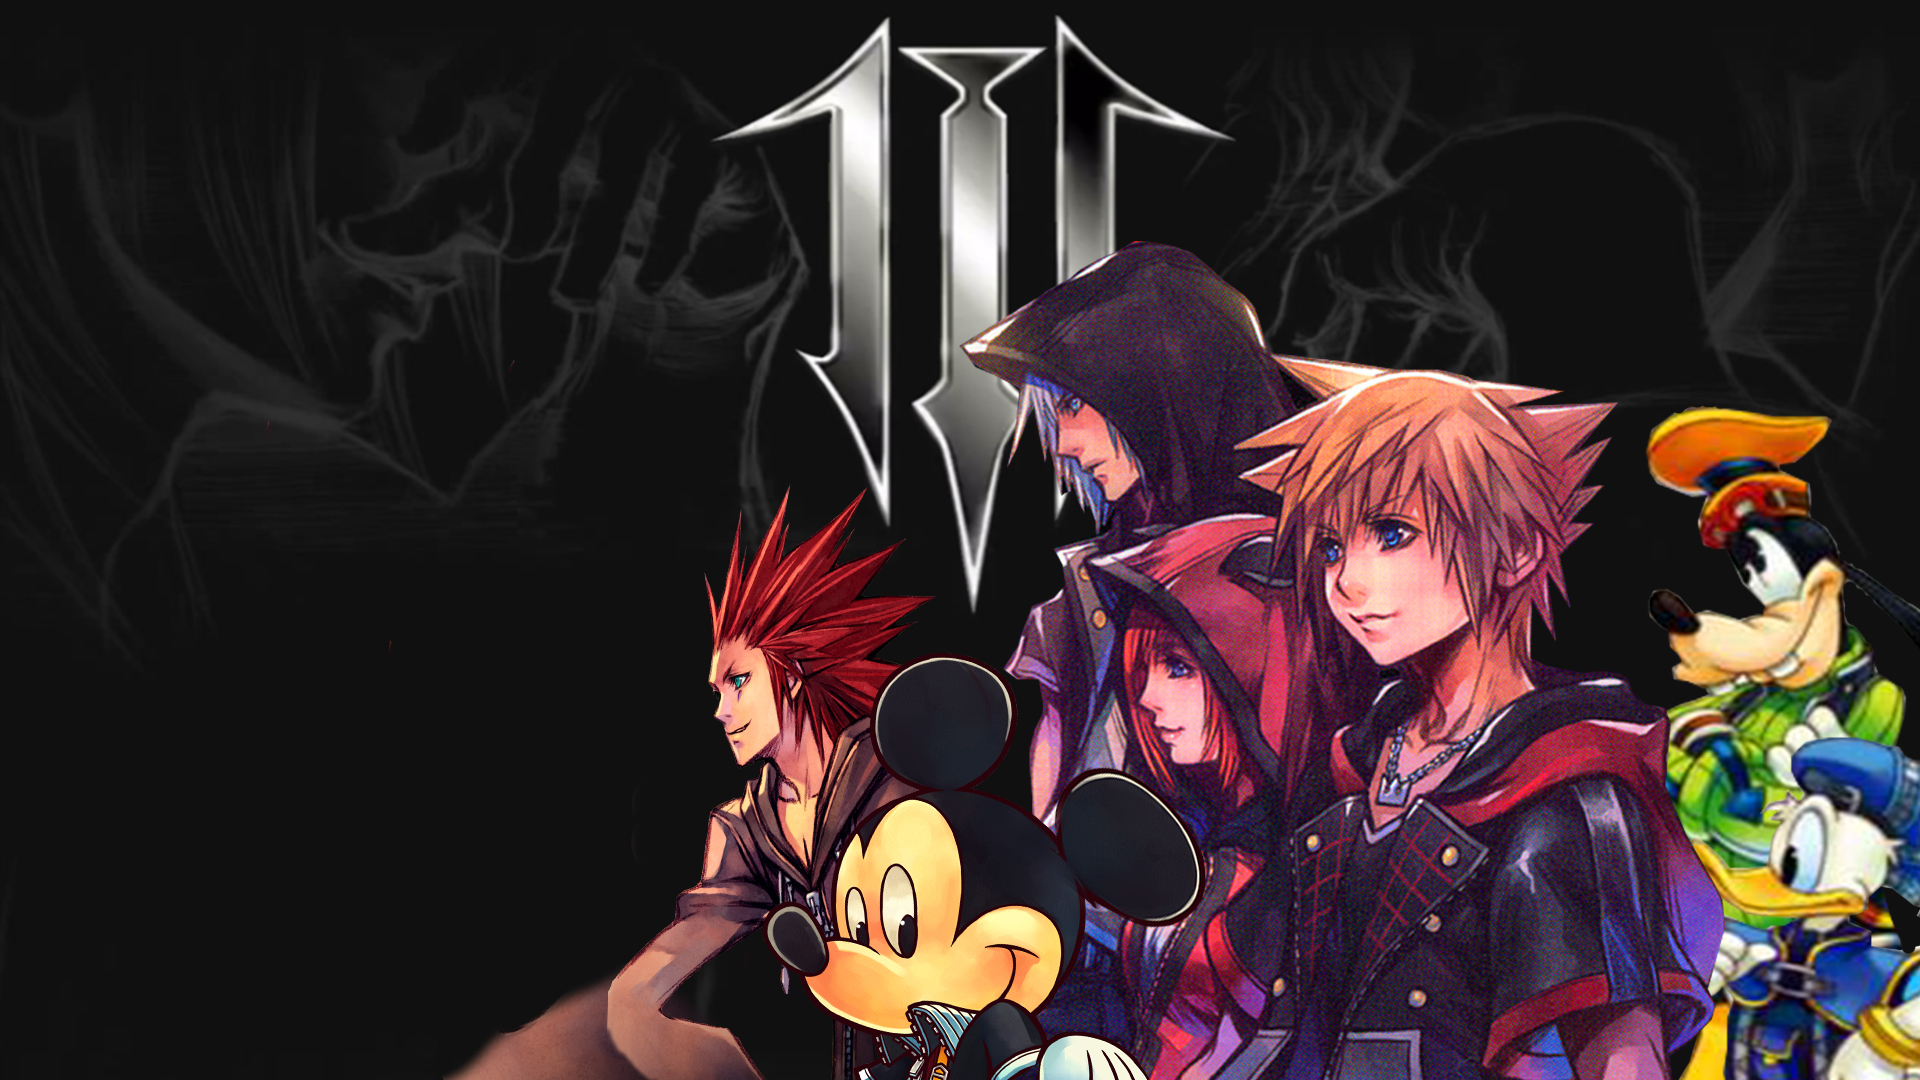 Kingdom Hearts III Wallpaper by Thekingblader995 on DeviantArt